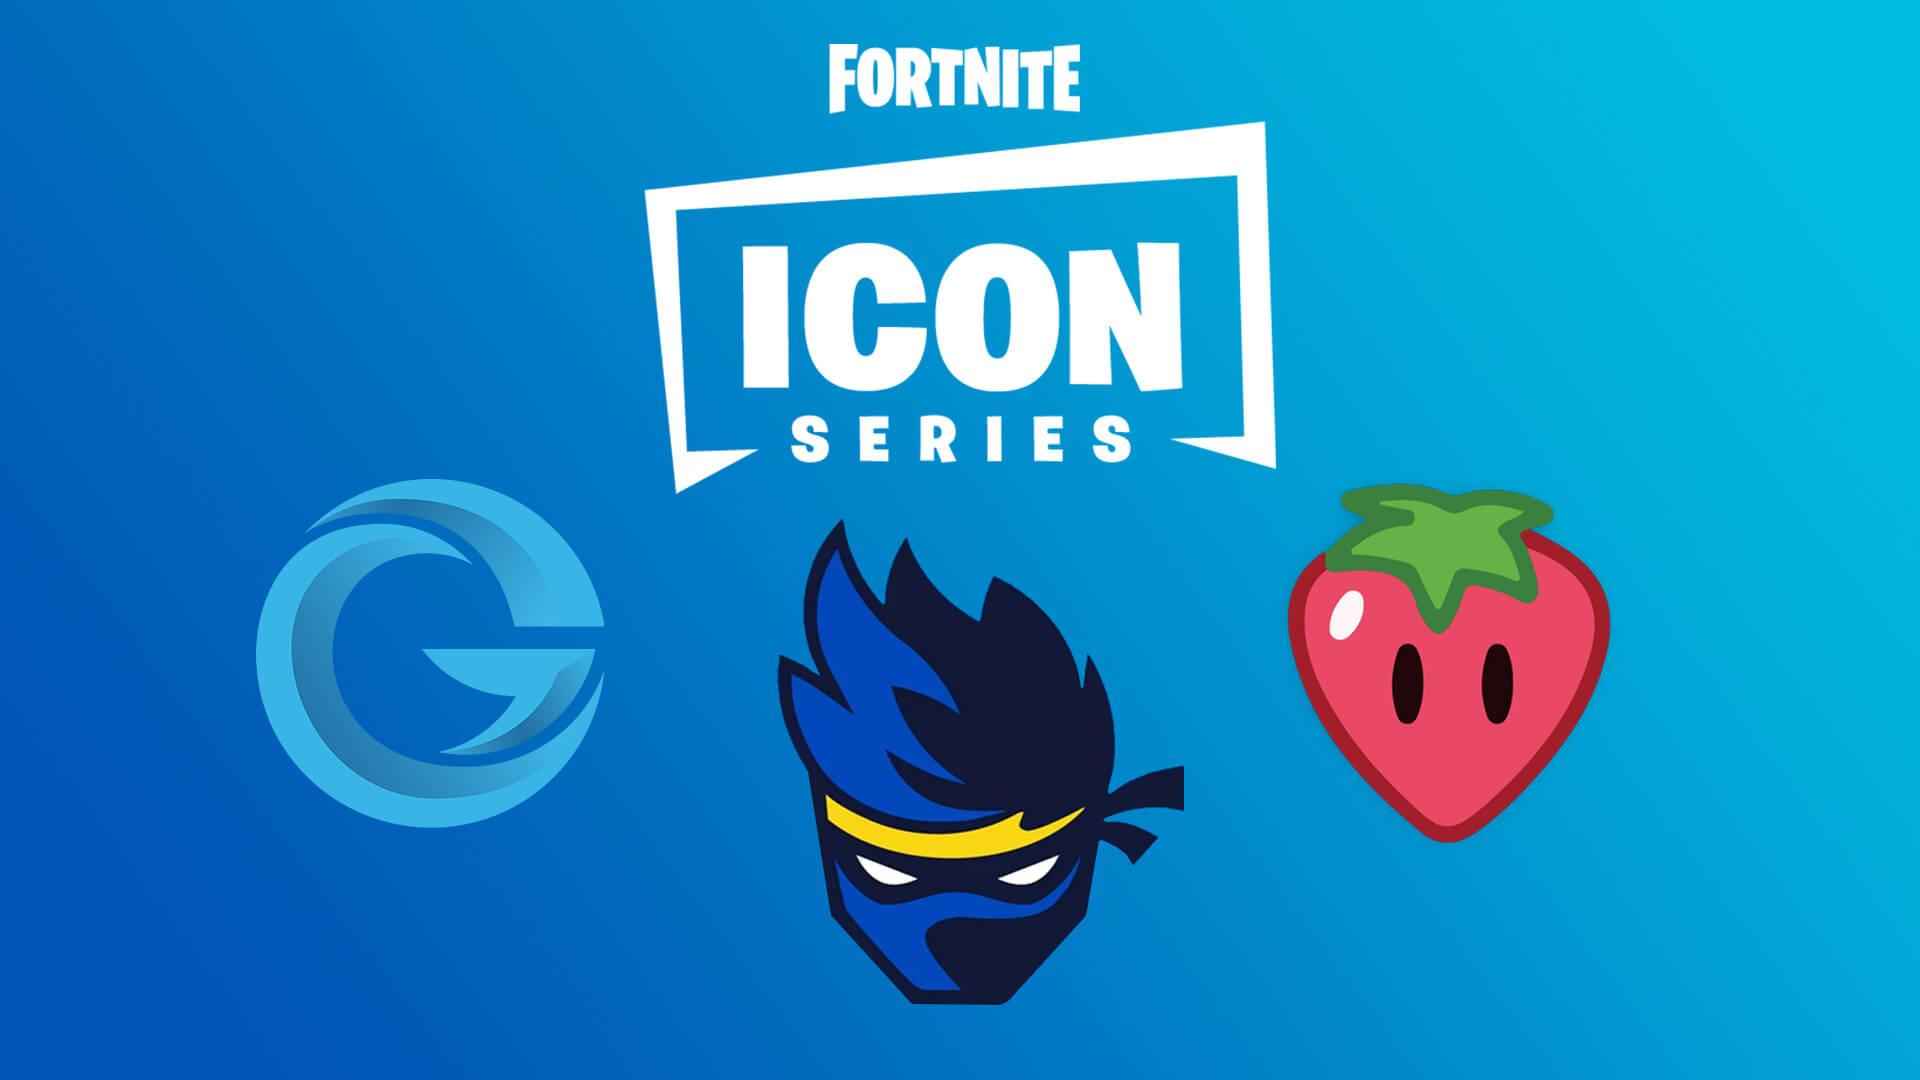 The Icon Series